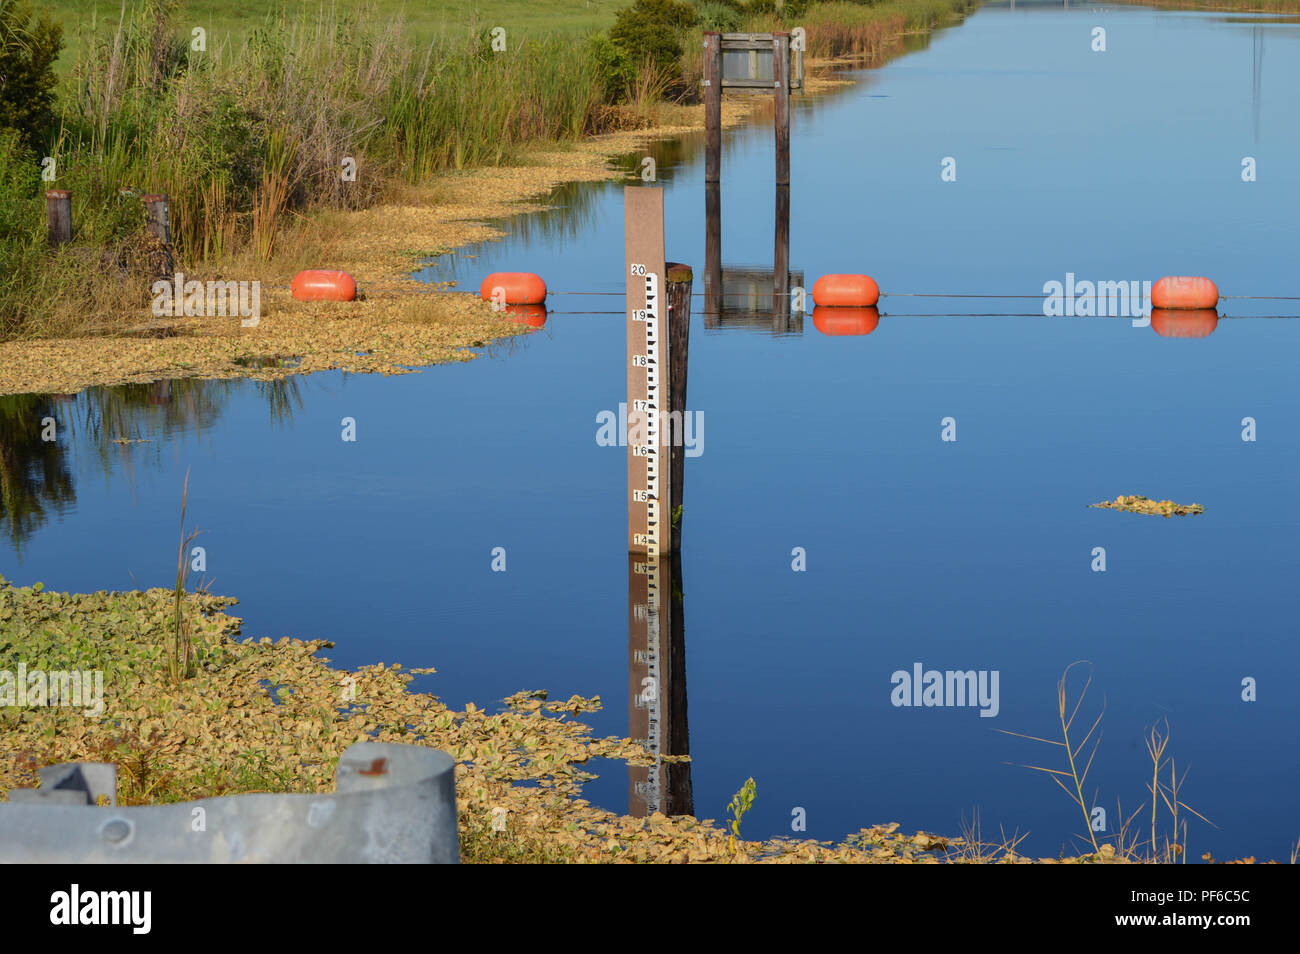 Personal Manometer Wassertiefe Indikator Instrument Stockfoto